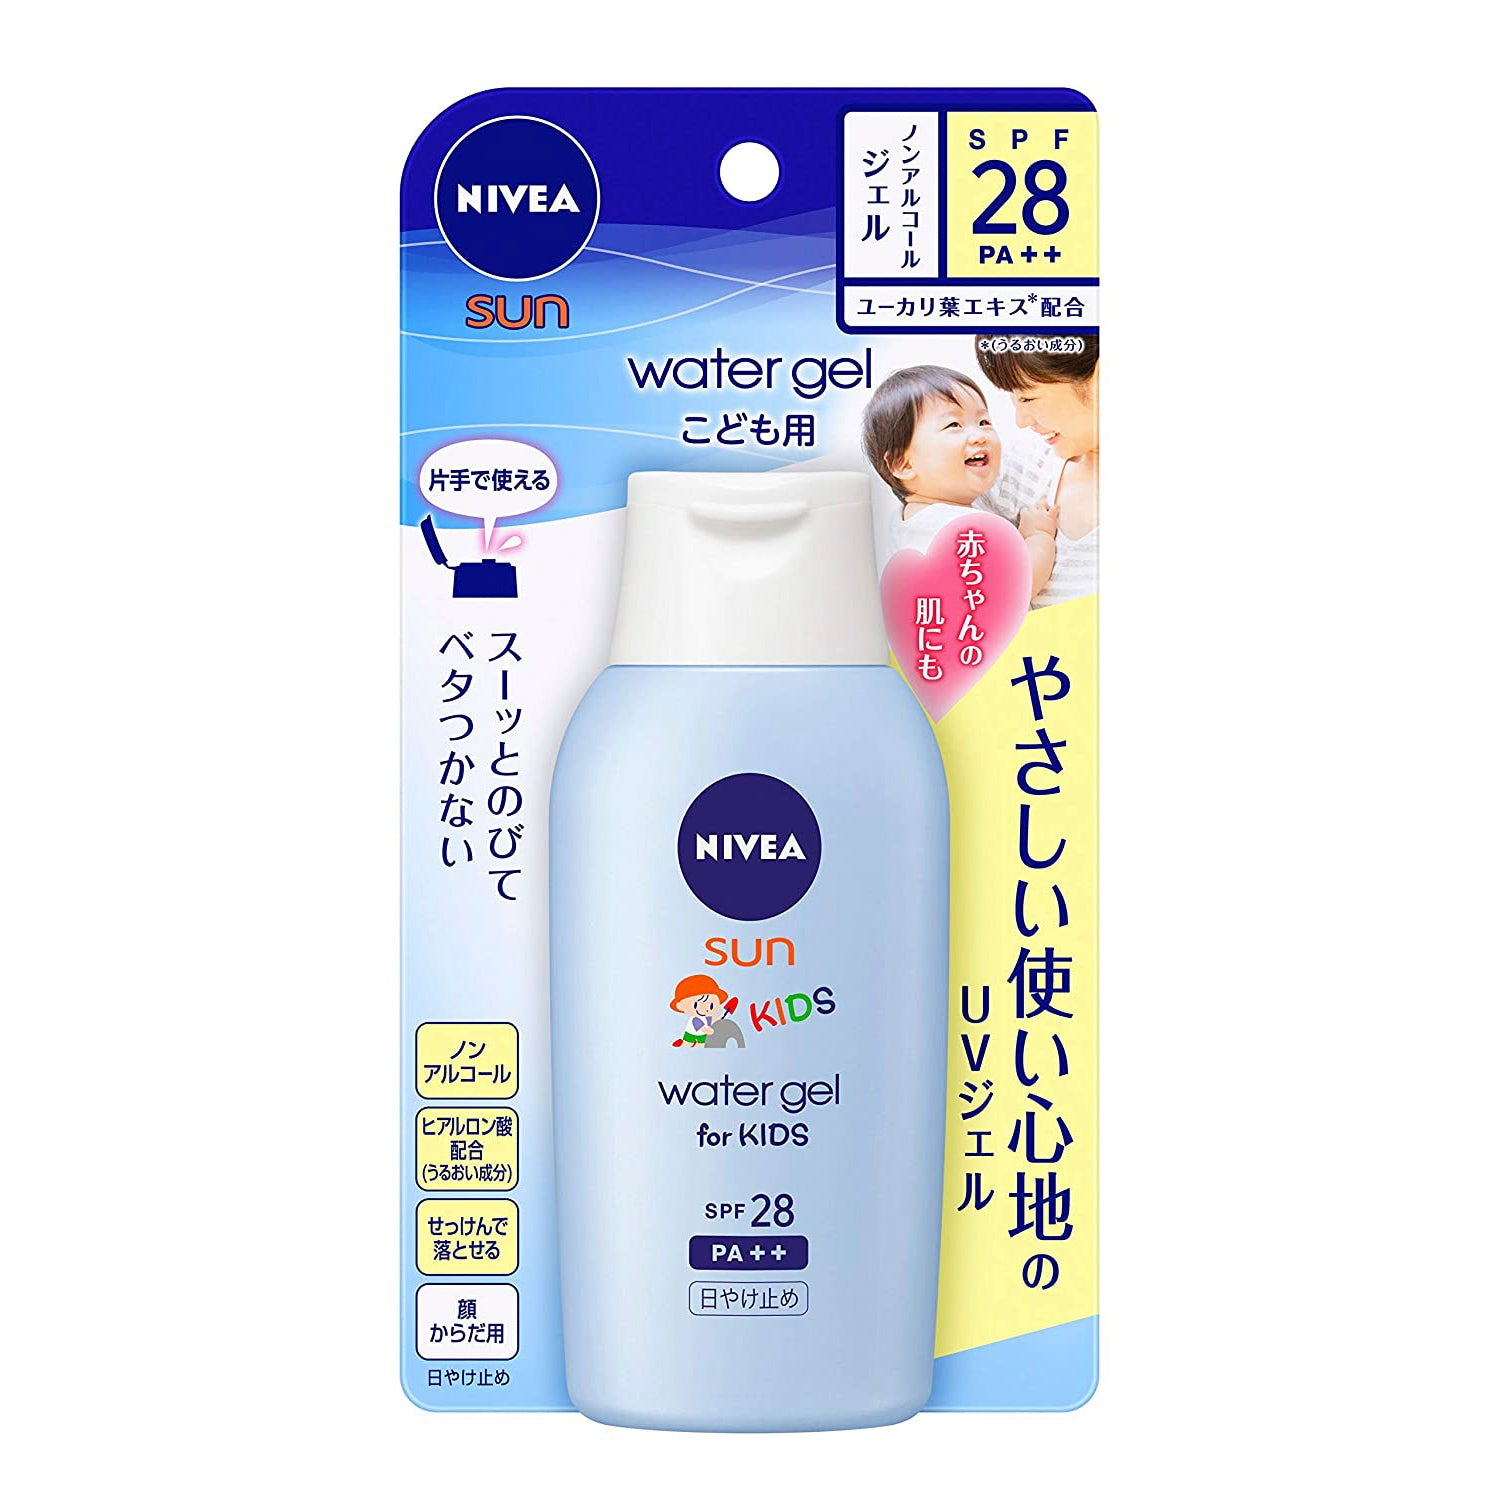 Nivea Sun Protect Water Gel for Kids SPF 28 PA++ Beauty Nivea   